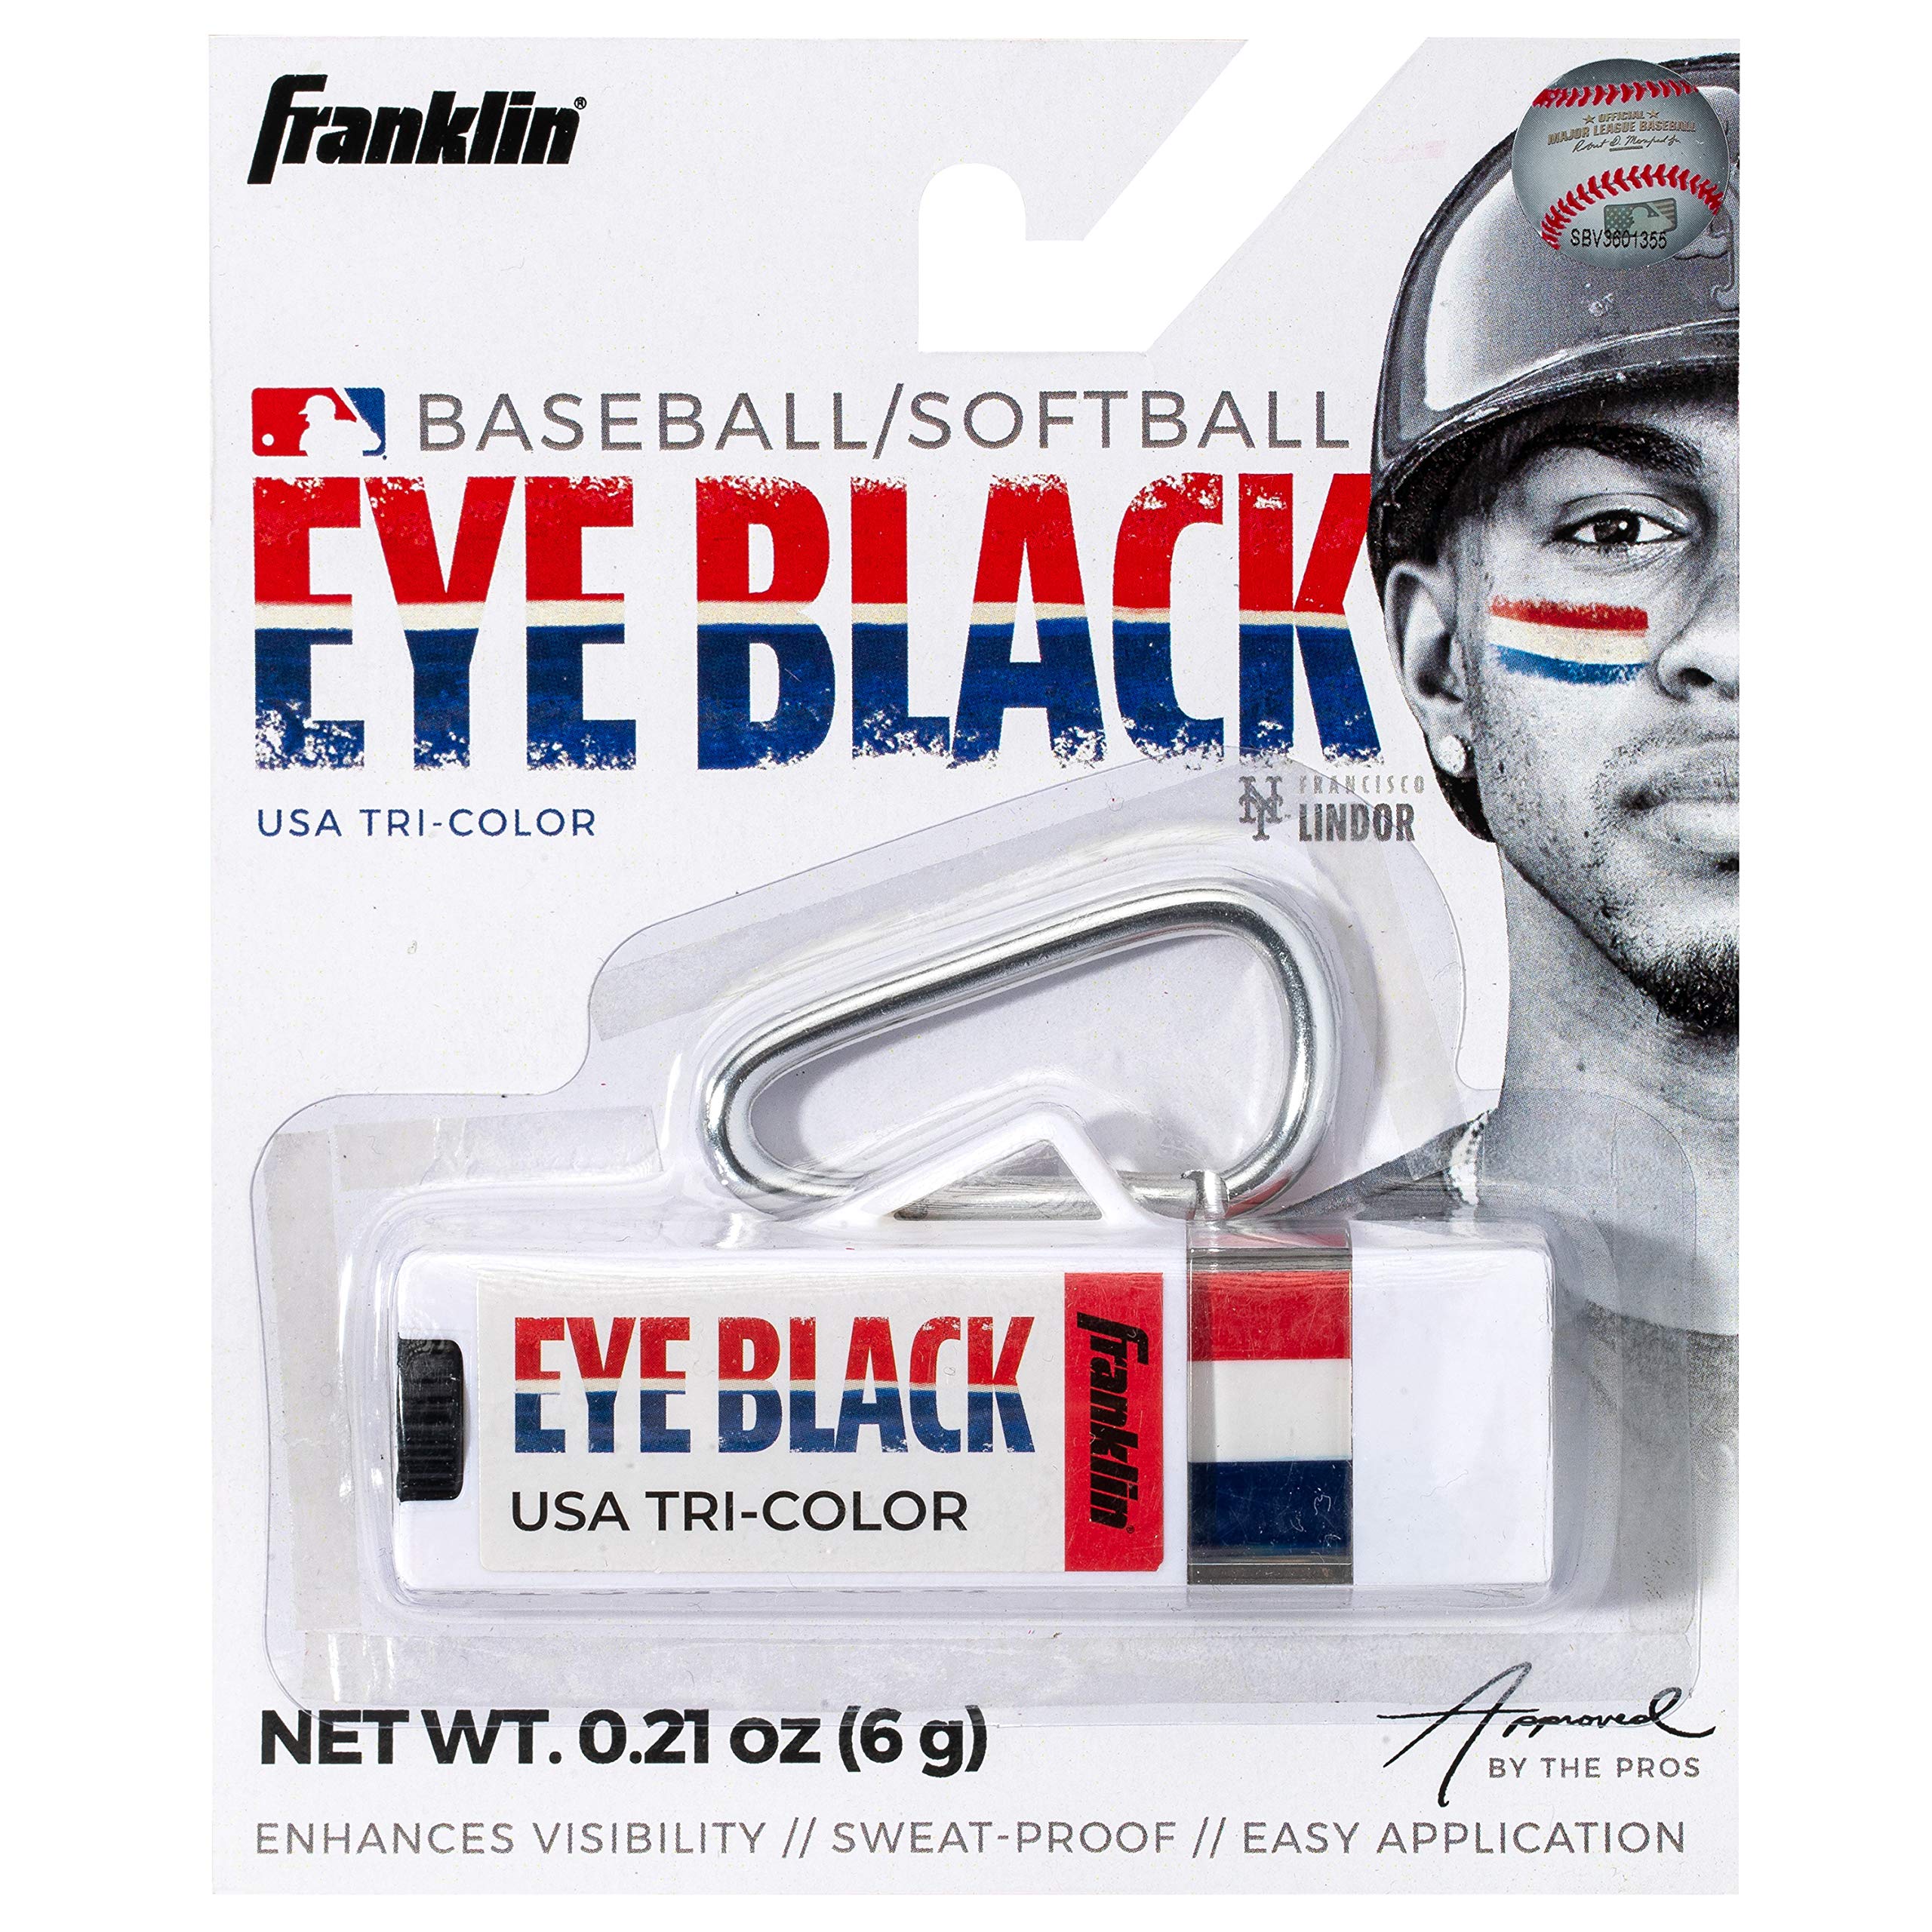 Franklin Sports MLB Eye Black - Glare Reduction Eye Black For All Athletes - Baseball Eye Black or Softball Eye Black - Eye Black Paint for Kids, Adults, Athletes, Baseball, Softball Players